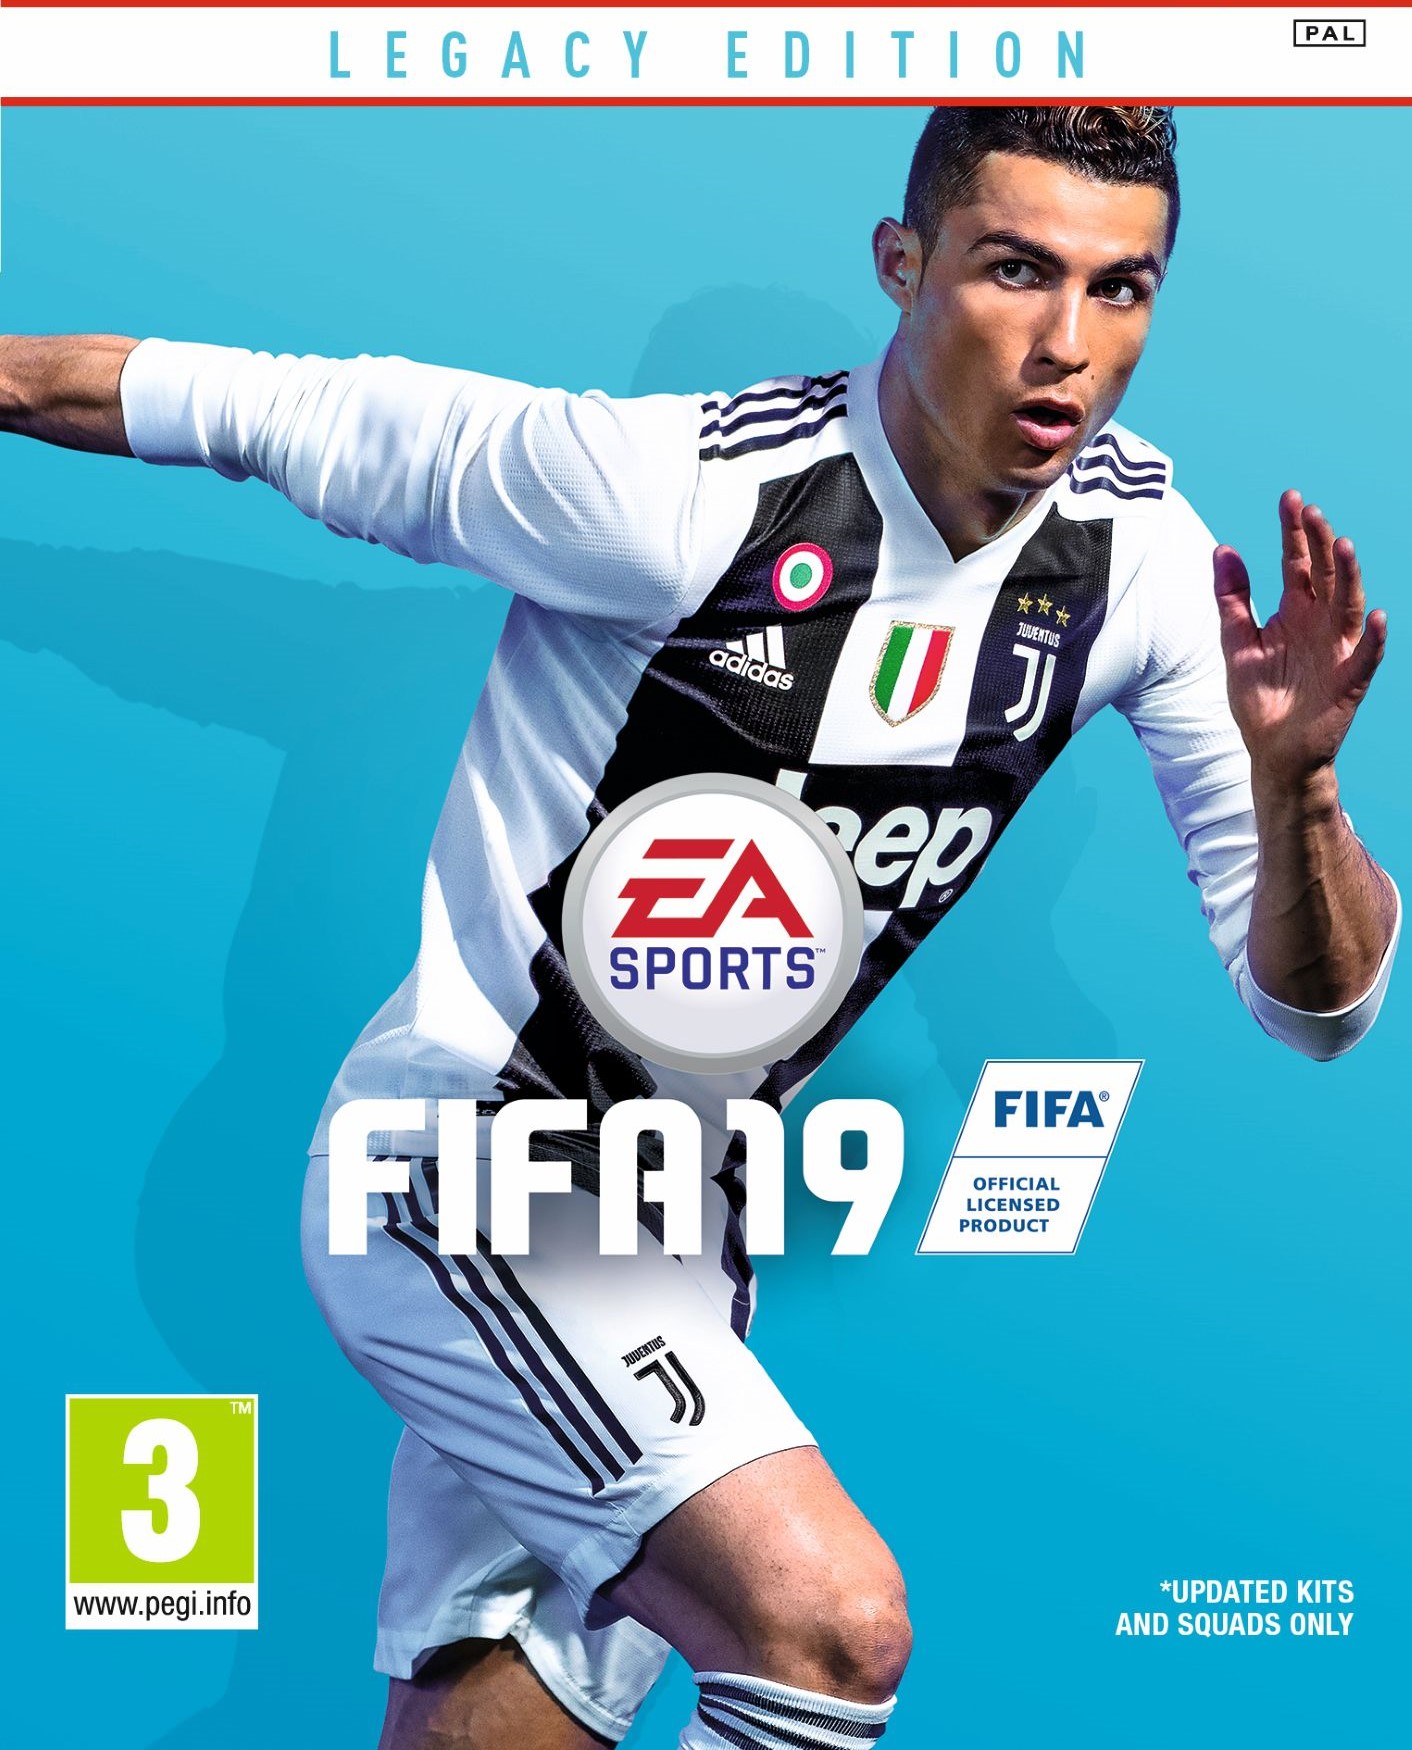 FIFA 19: Legacy Edition (2018)